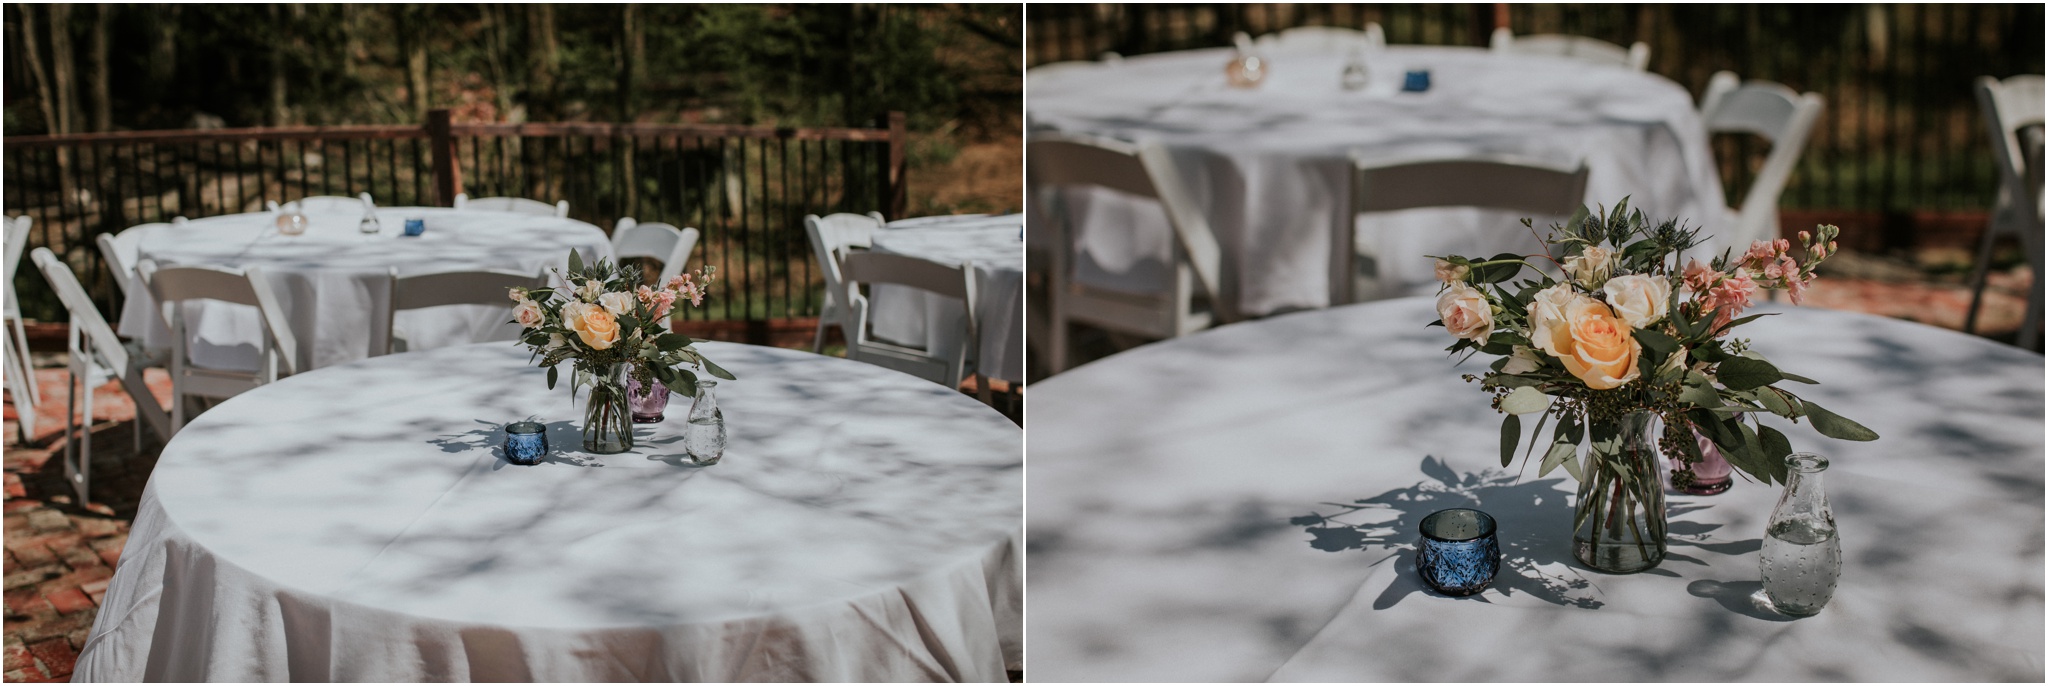 millstone-limestone-tn-tennessee-rustic-outdoors-pastel-lodge-cabin-venue-wedding-katy-sergent-photographer_0133.jpg